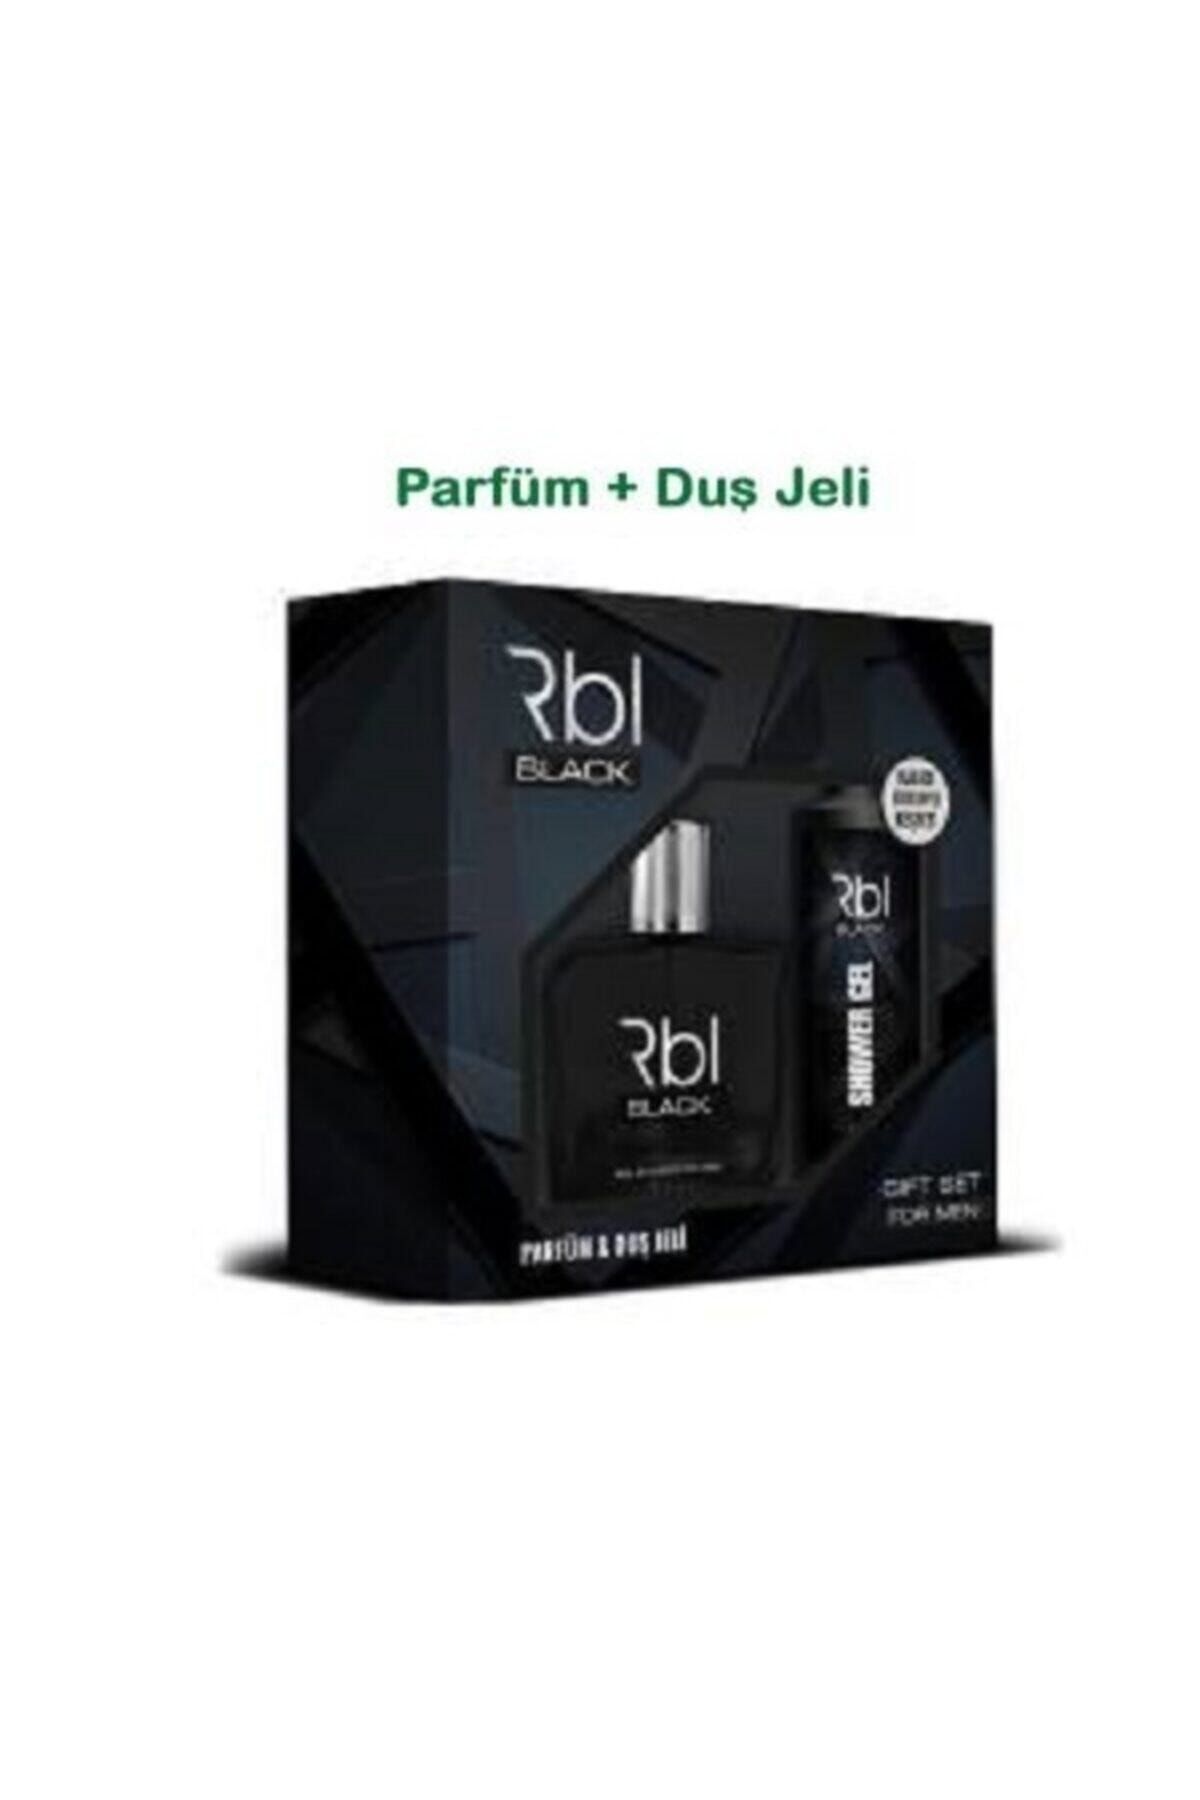 Rebul Orıjınal Rbl Black 90 Ml Parfüm + 200 Ml Duş Jeli Ikili Set